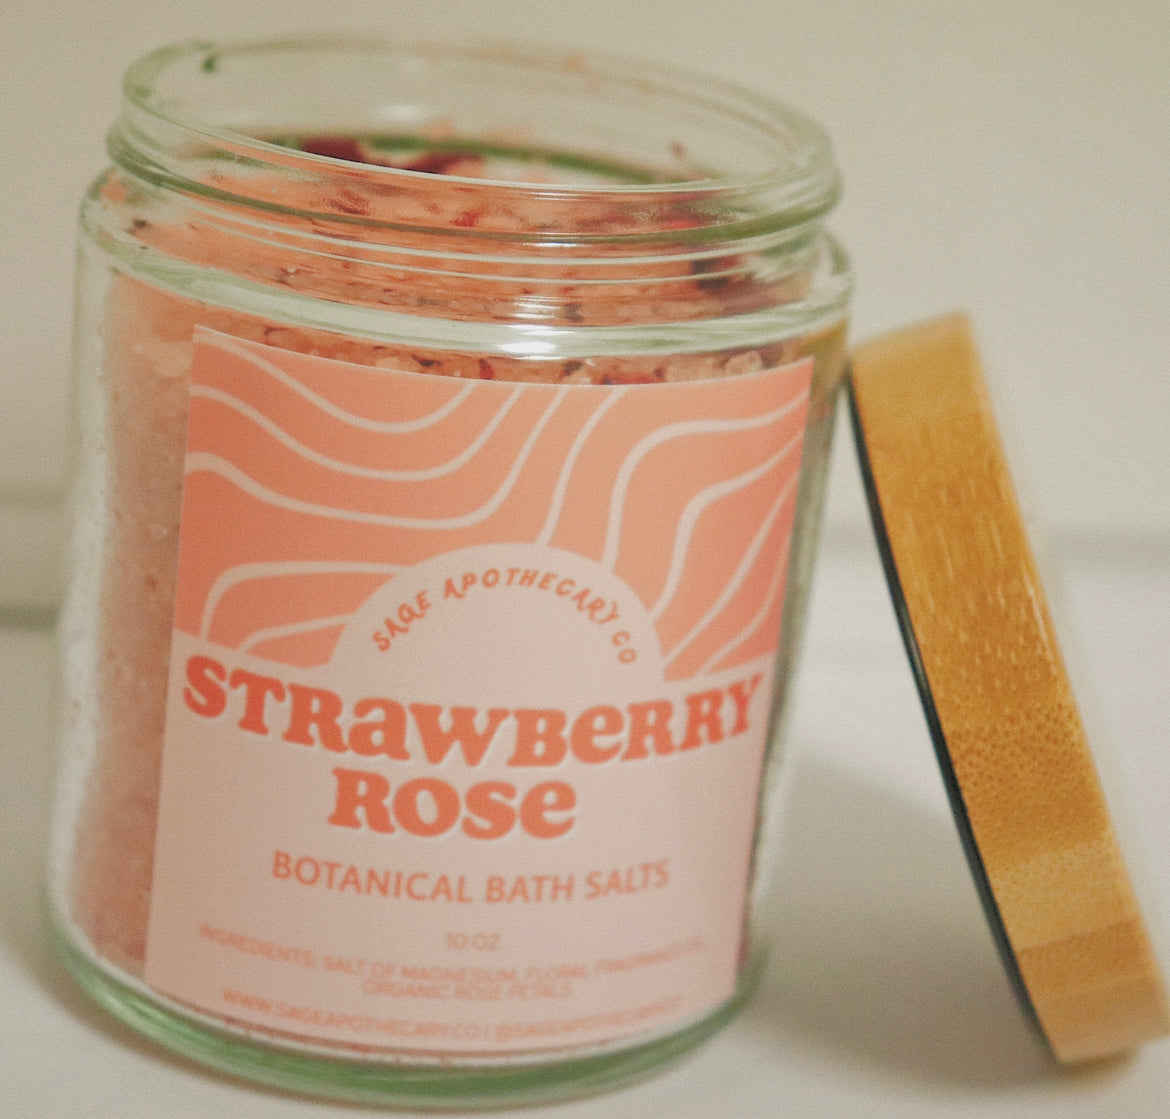 STRAWBERRY ROSE BOTANICAL BATH SALT